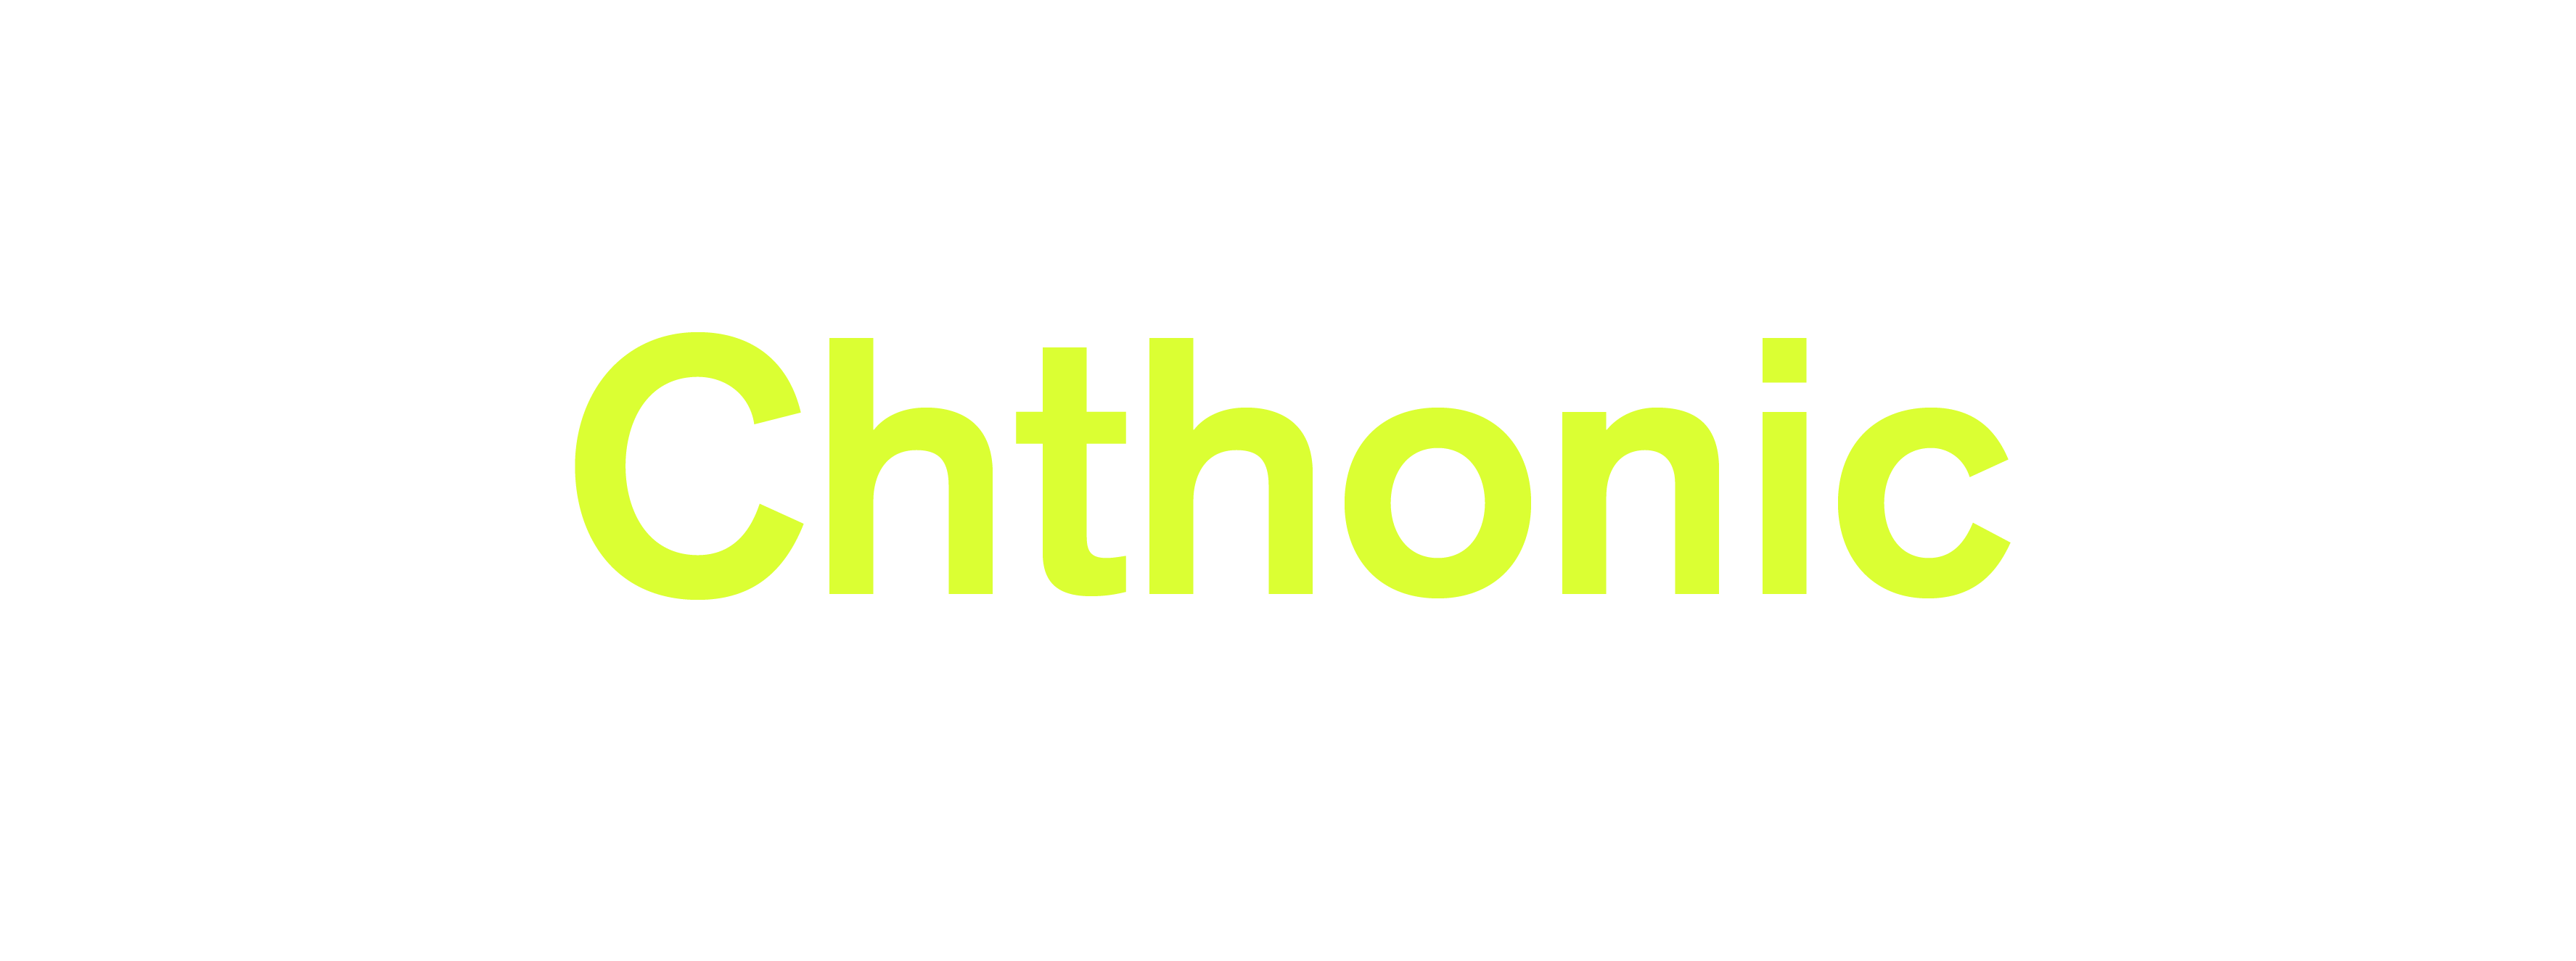 Chthonic